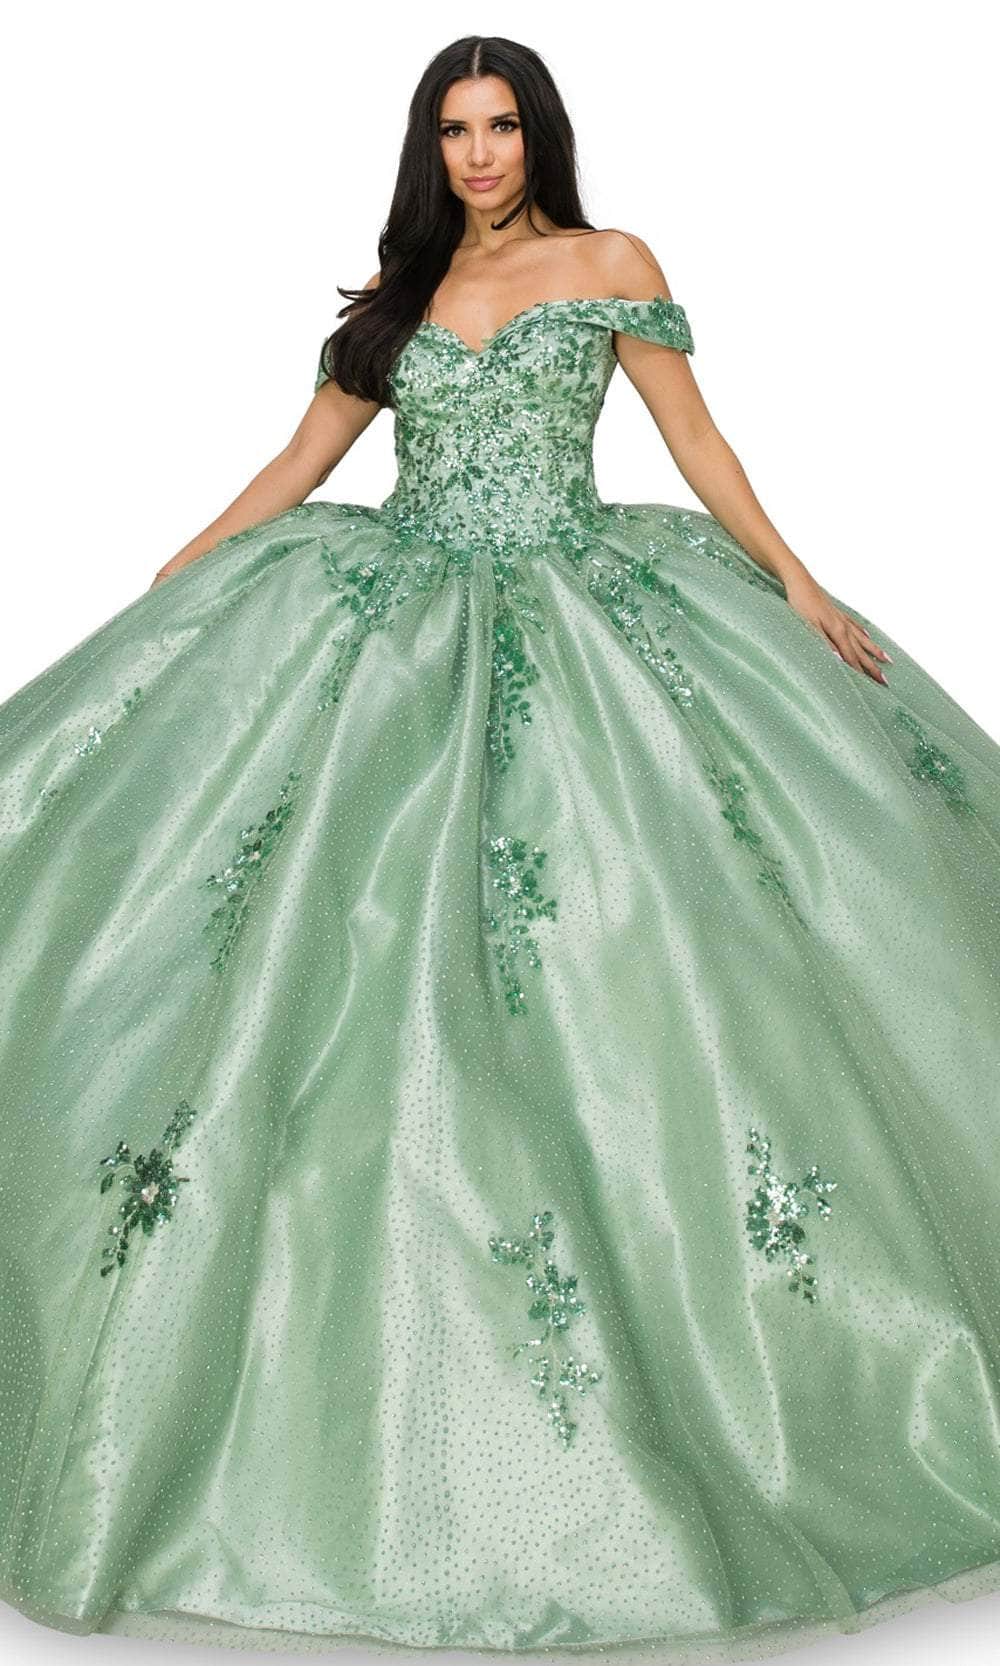 Cinderella Couture 8060J - Floral Applique Off-Shoulder Ballgown
